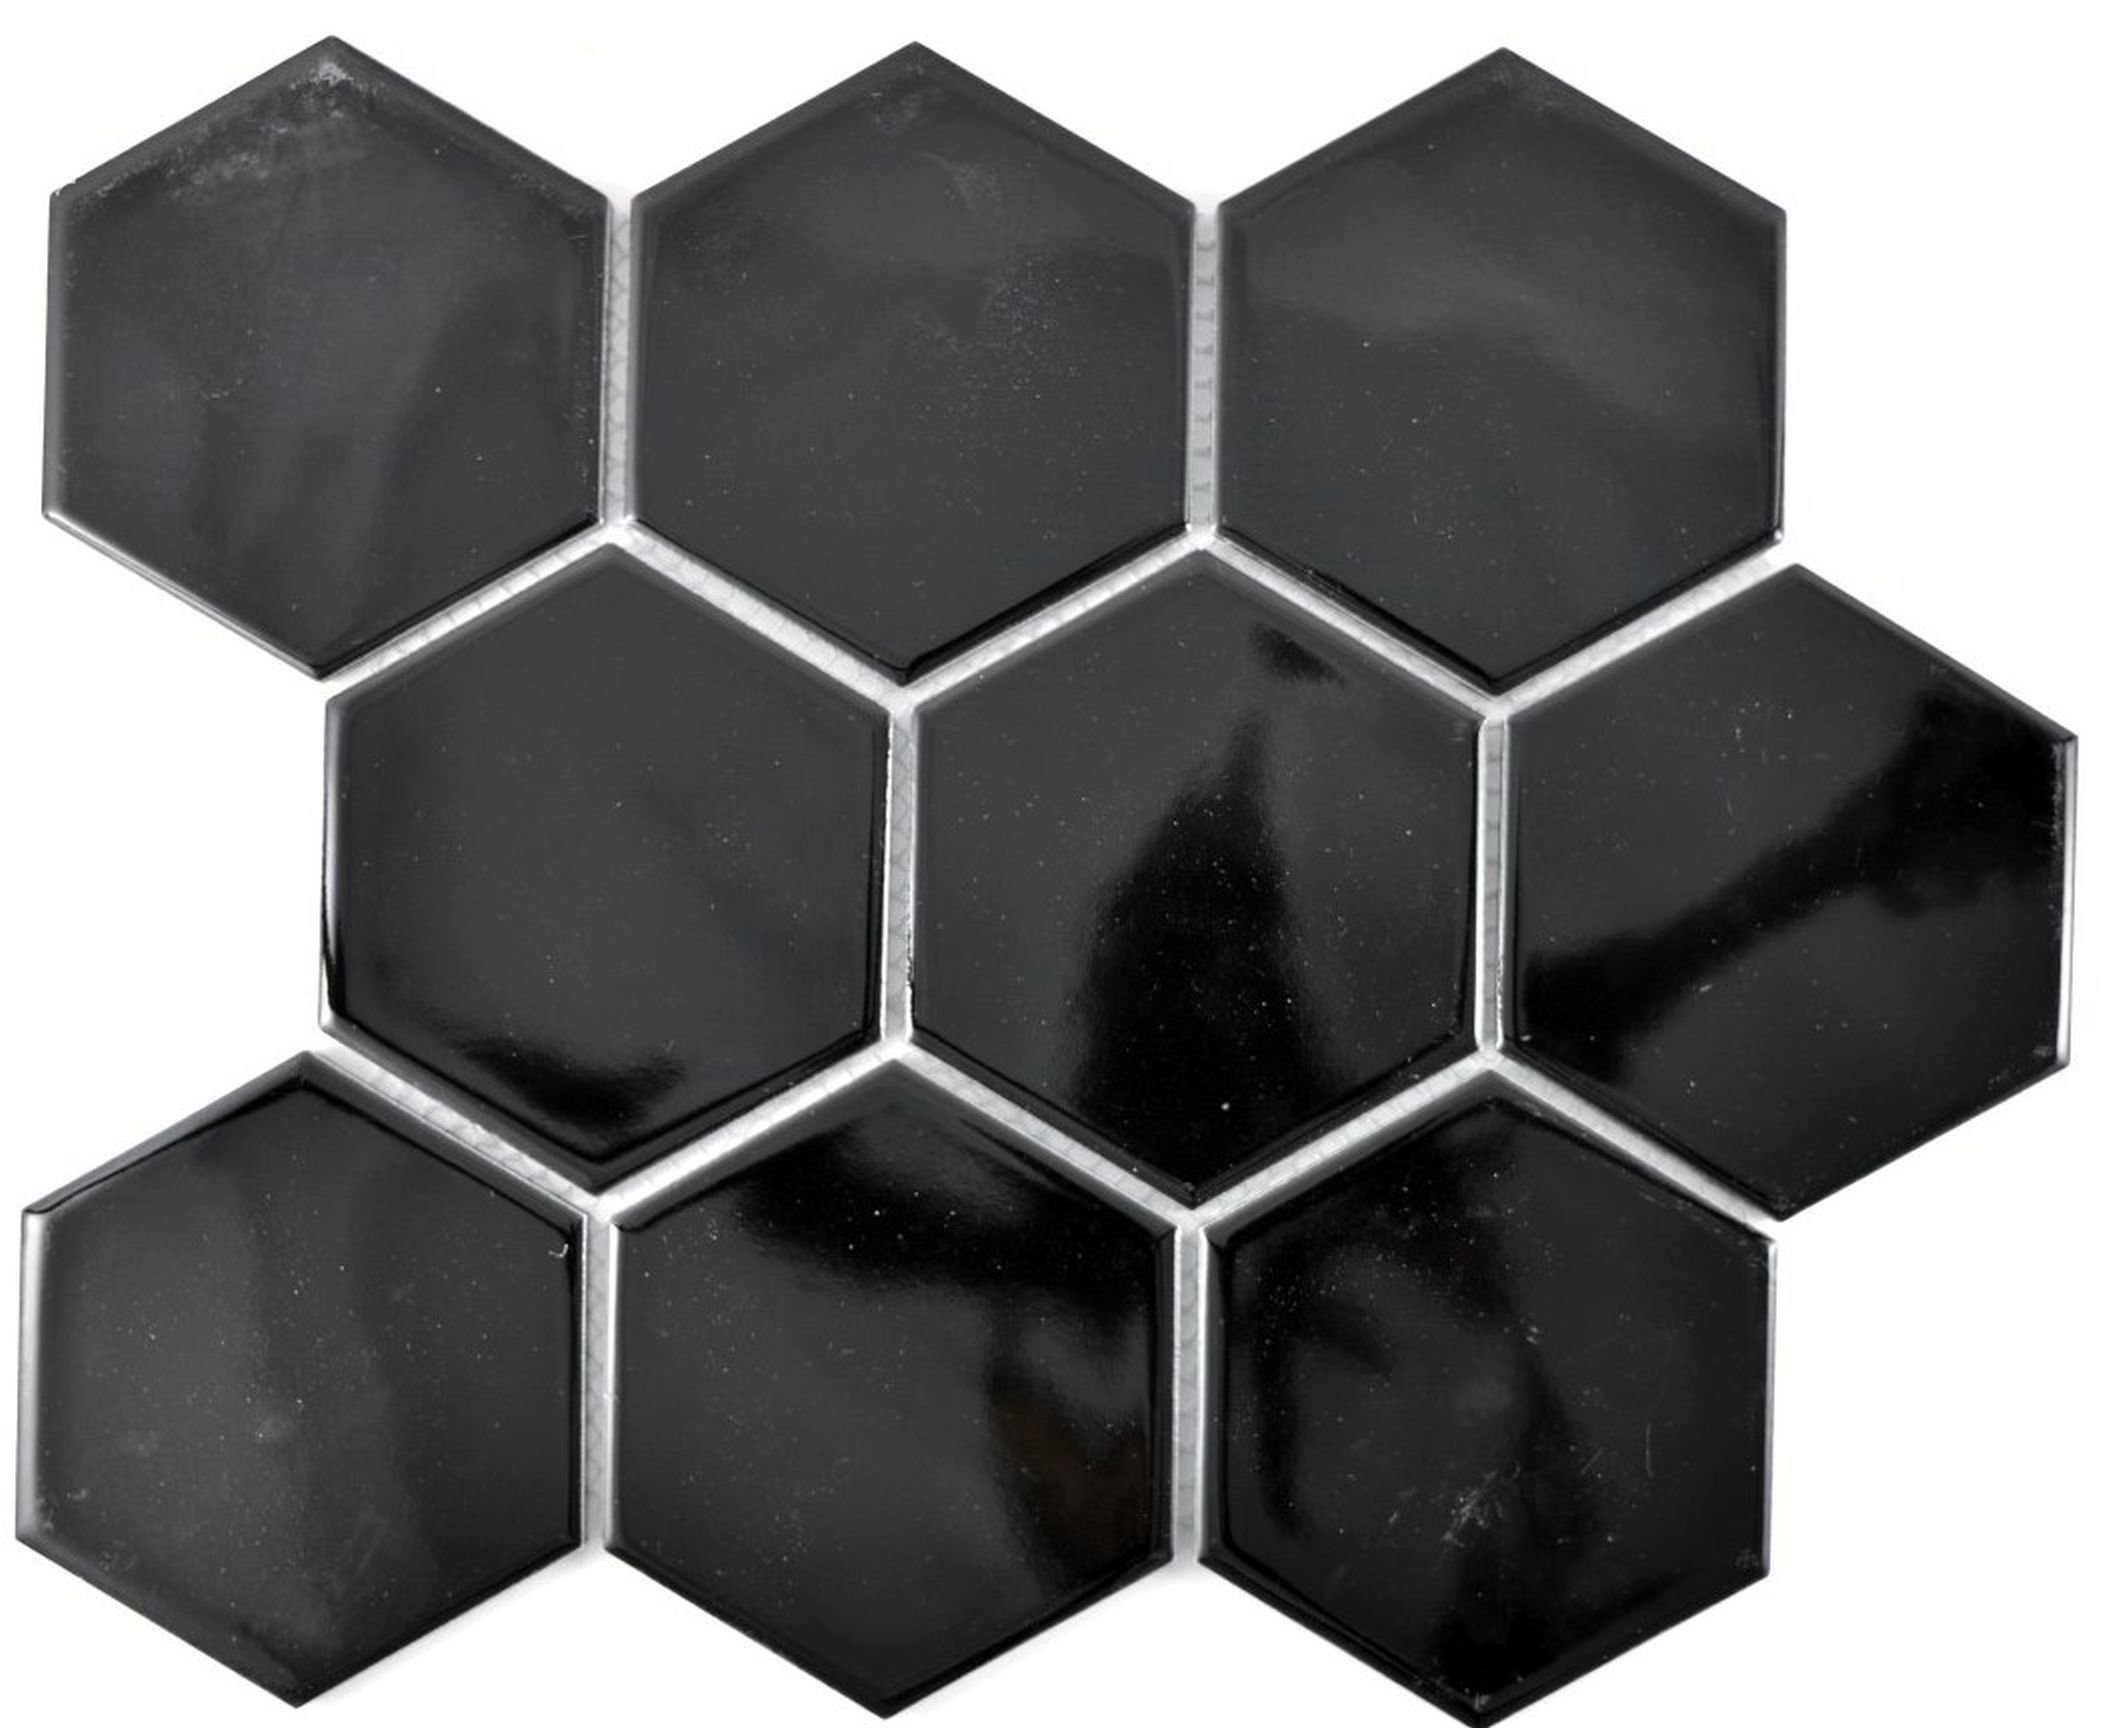 Mosani Mosaikfliesen Hexagonale Mosaik schwarz Bad Fliese Küche Sechseck glänzend Keramik